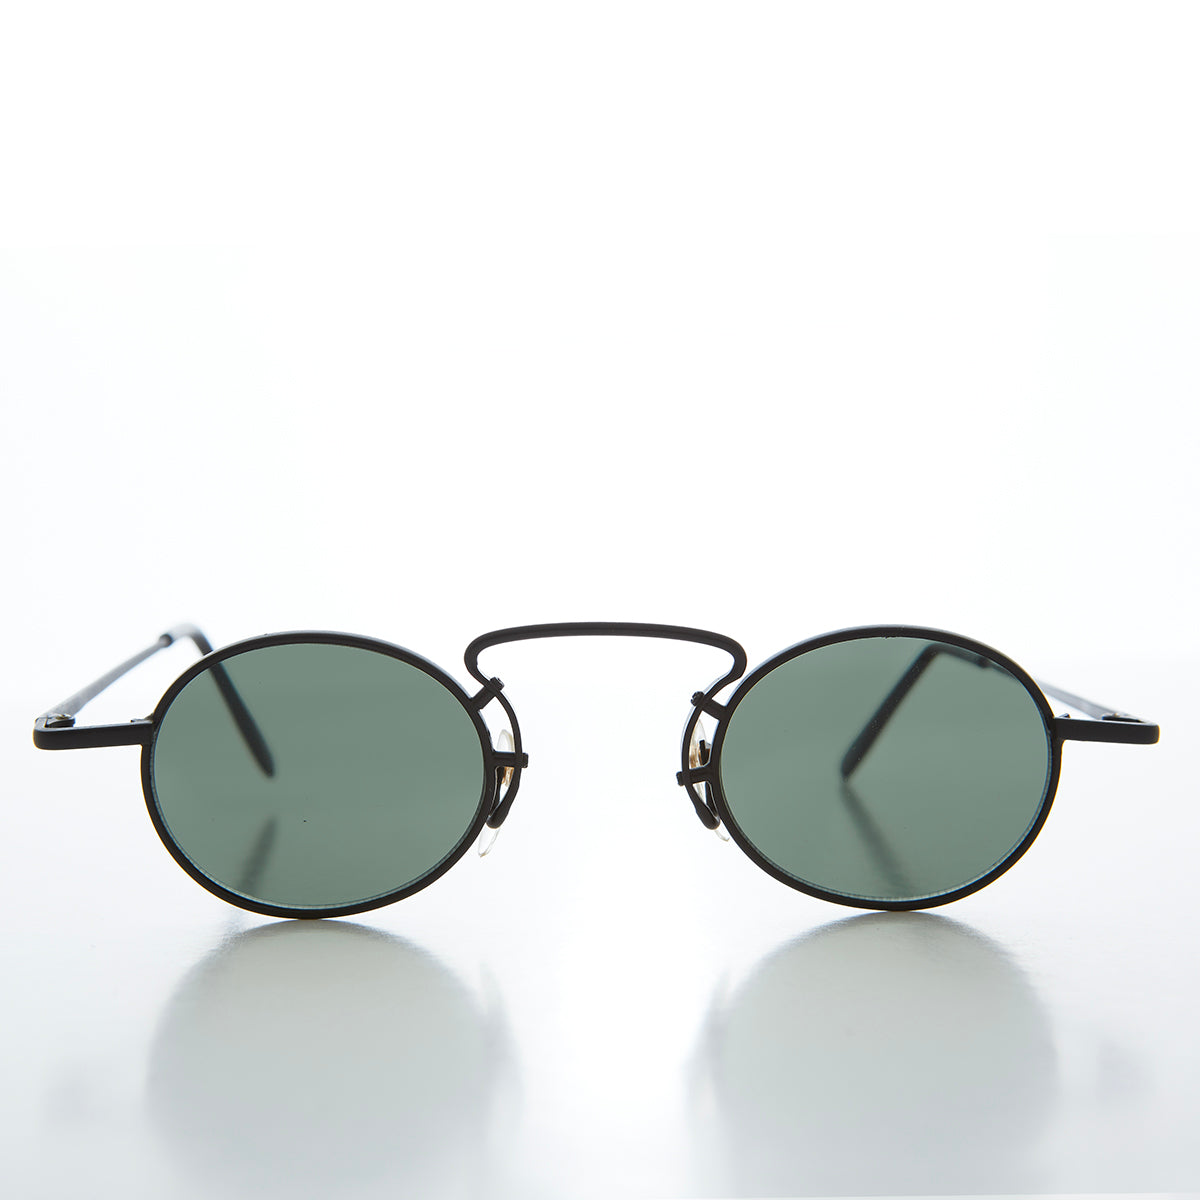 oval black sunglasses